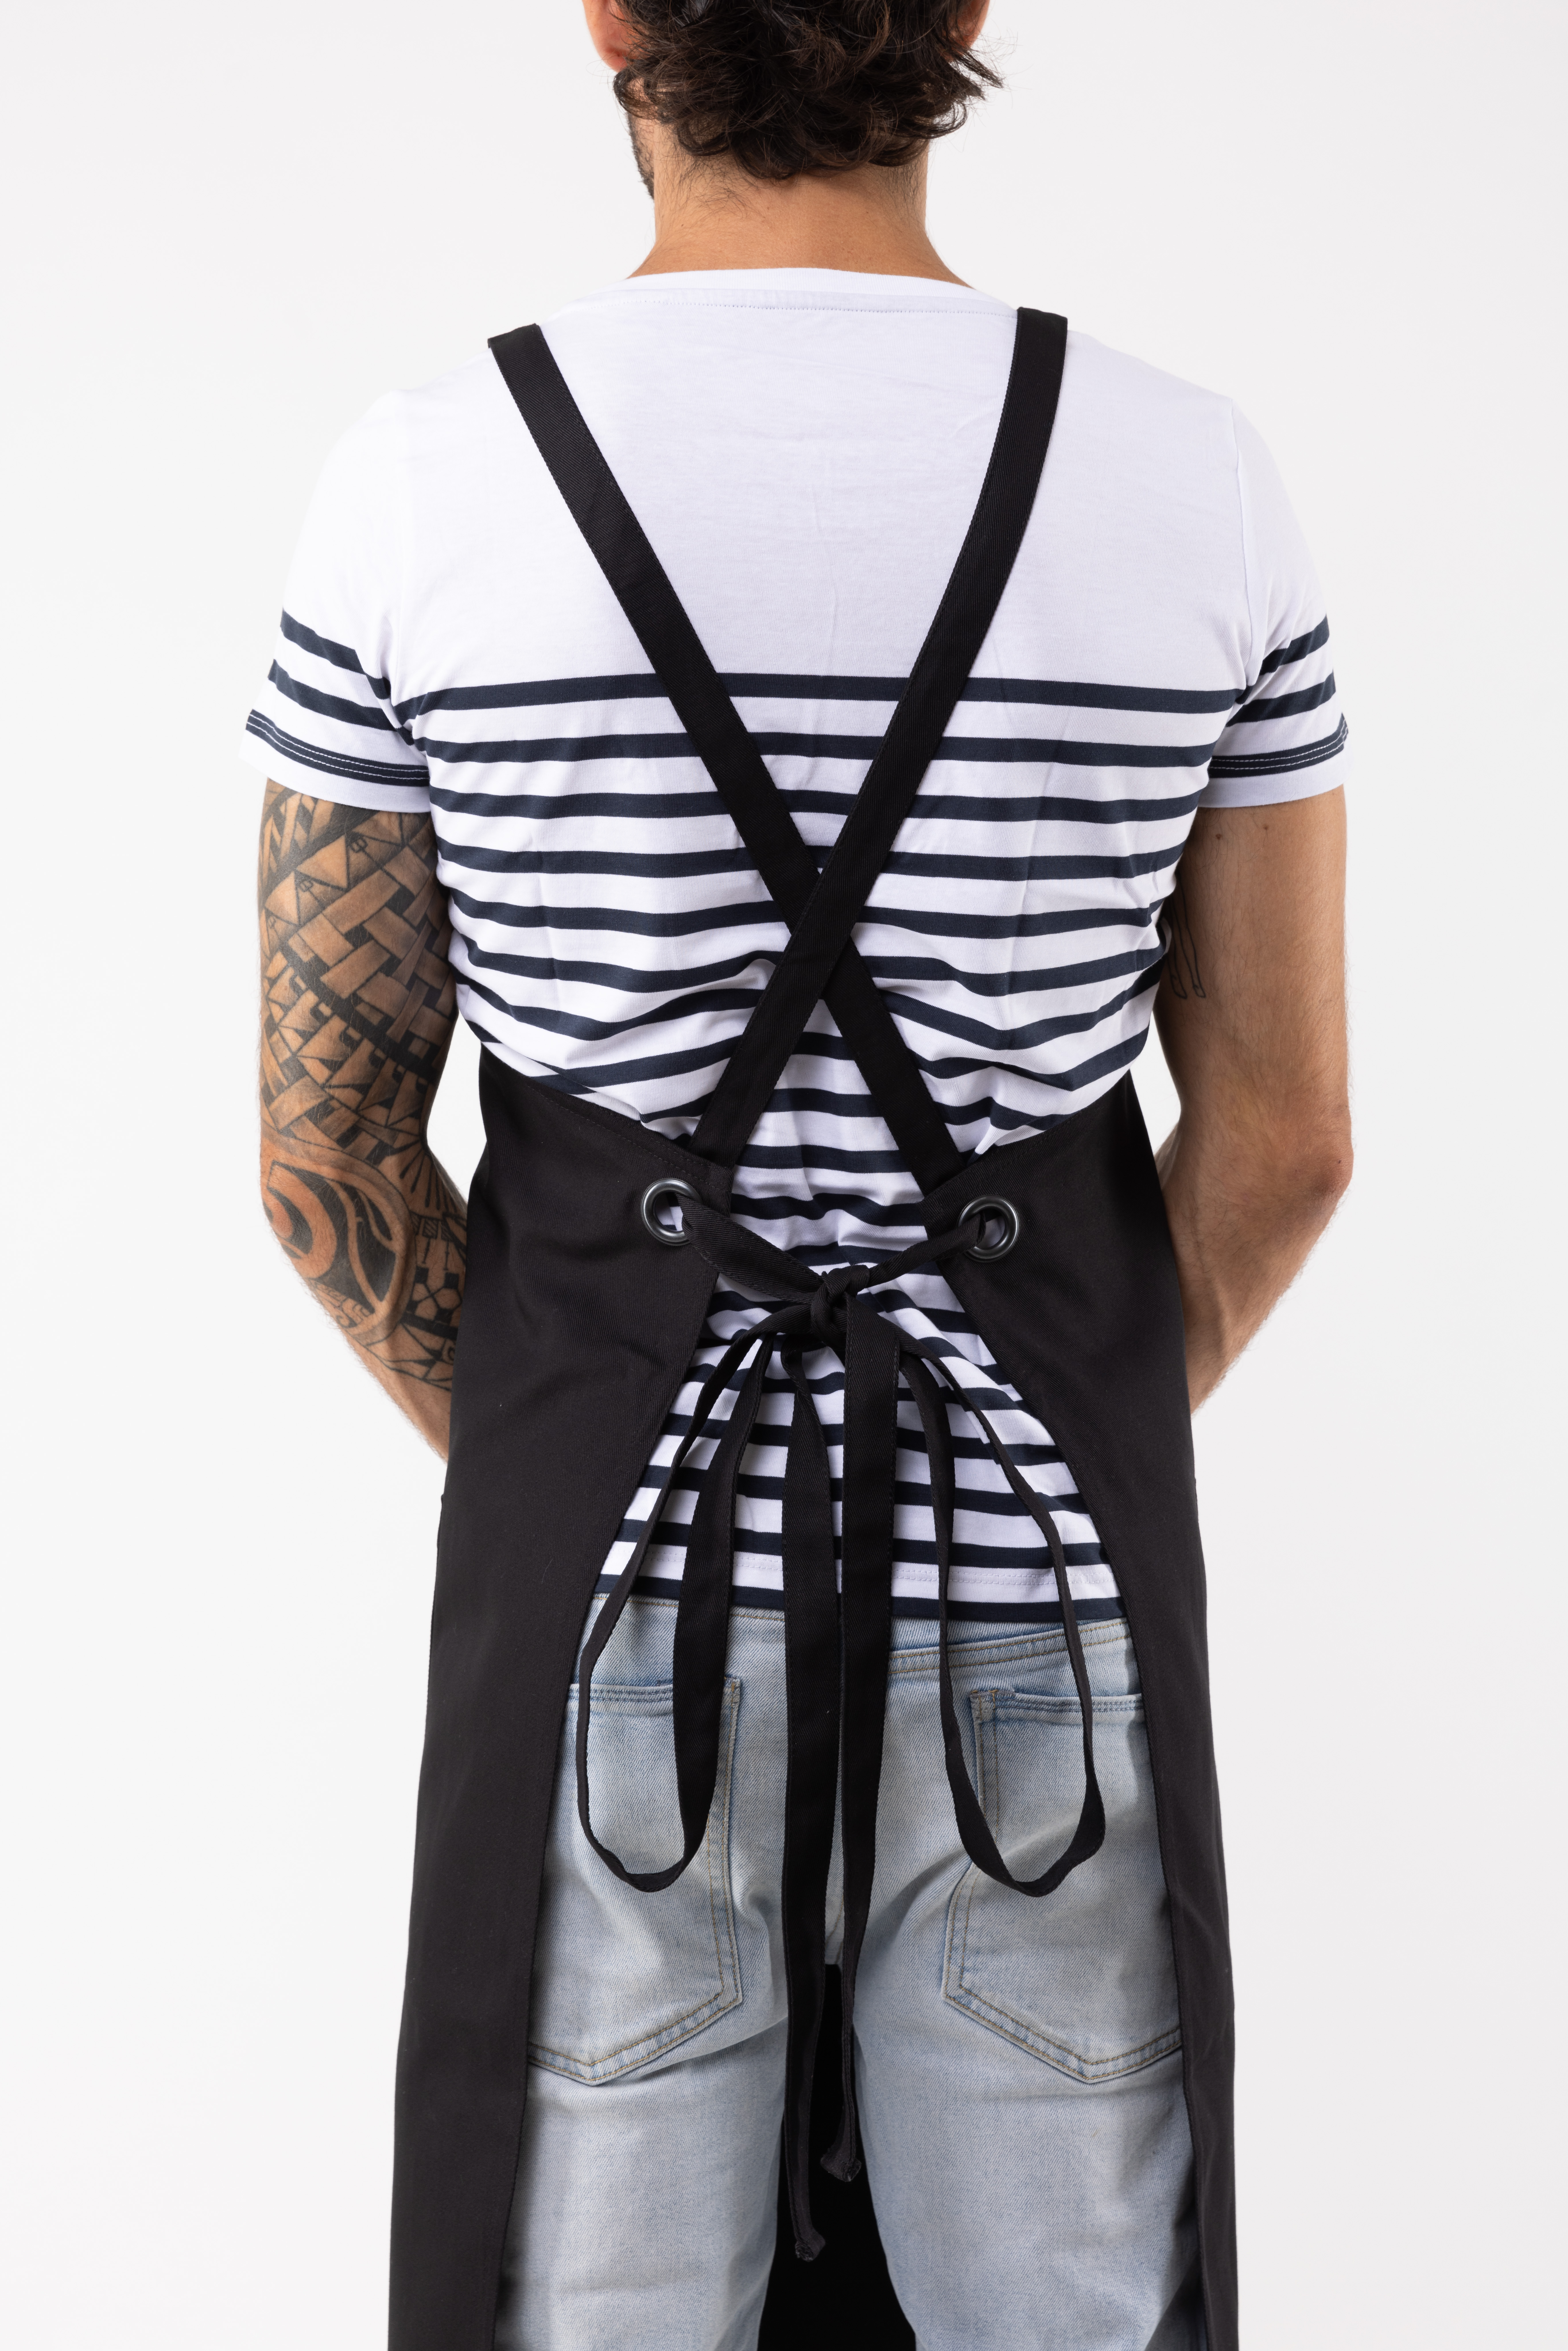 cross-back black apron